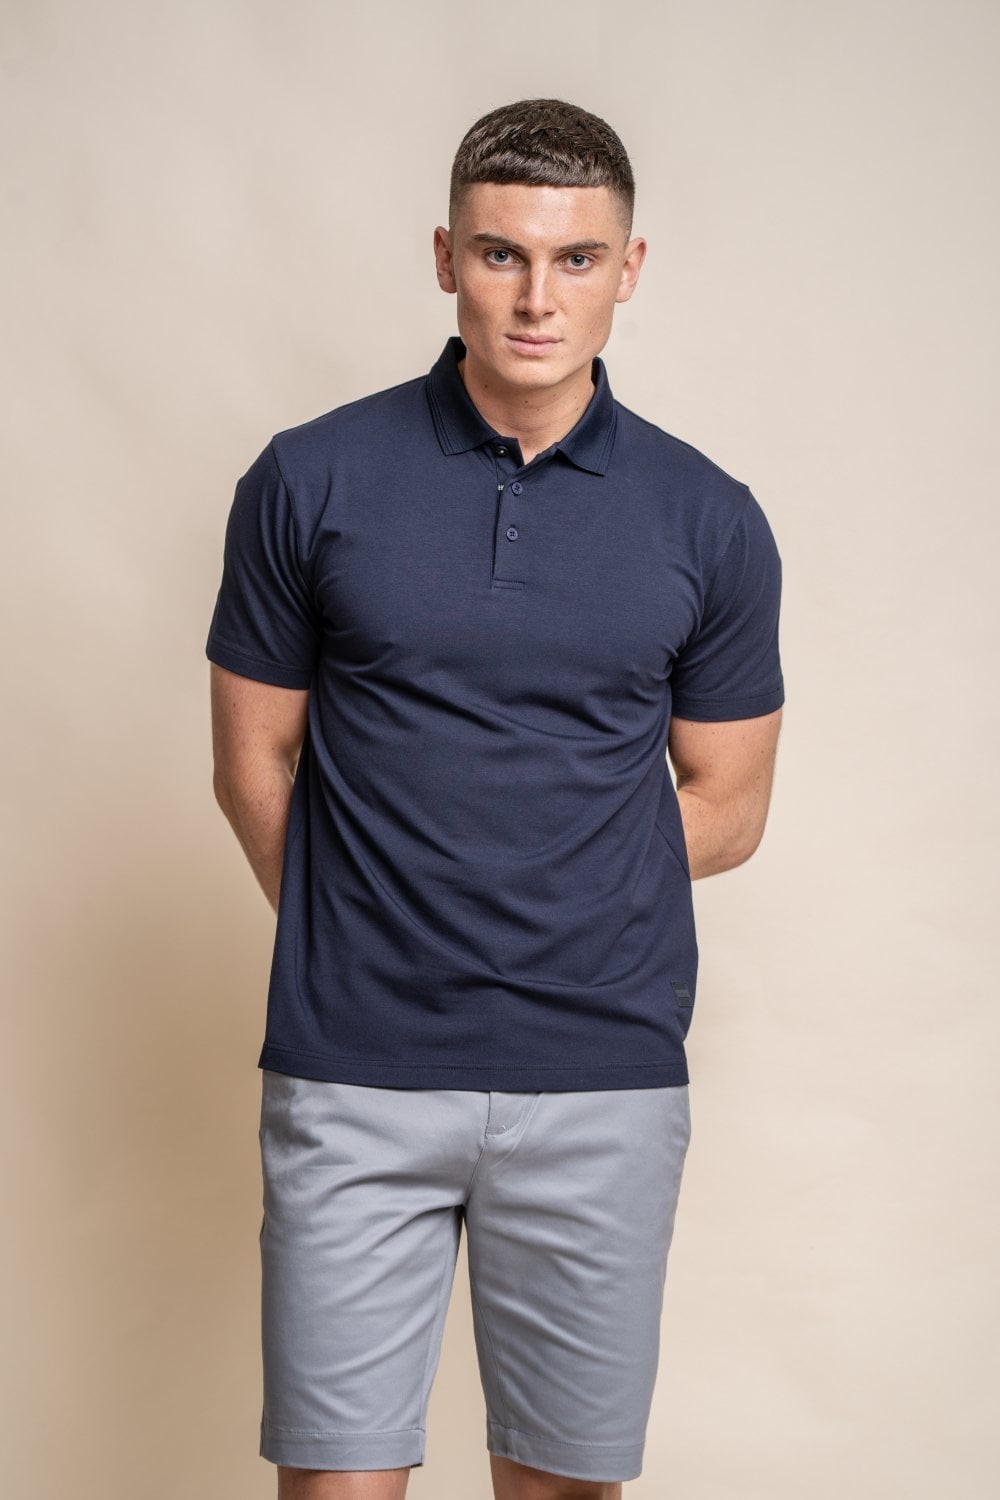 Men's Slim Fit Cotton Short Sleeve Polo T-Shirt - Kelsey - Navy Blue